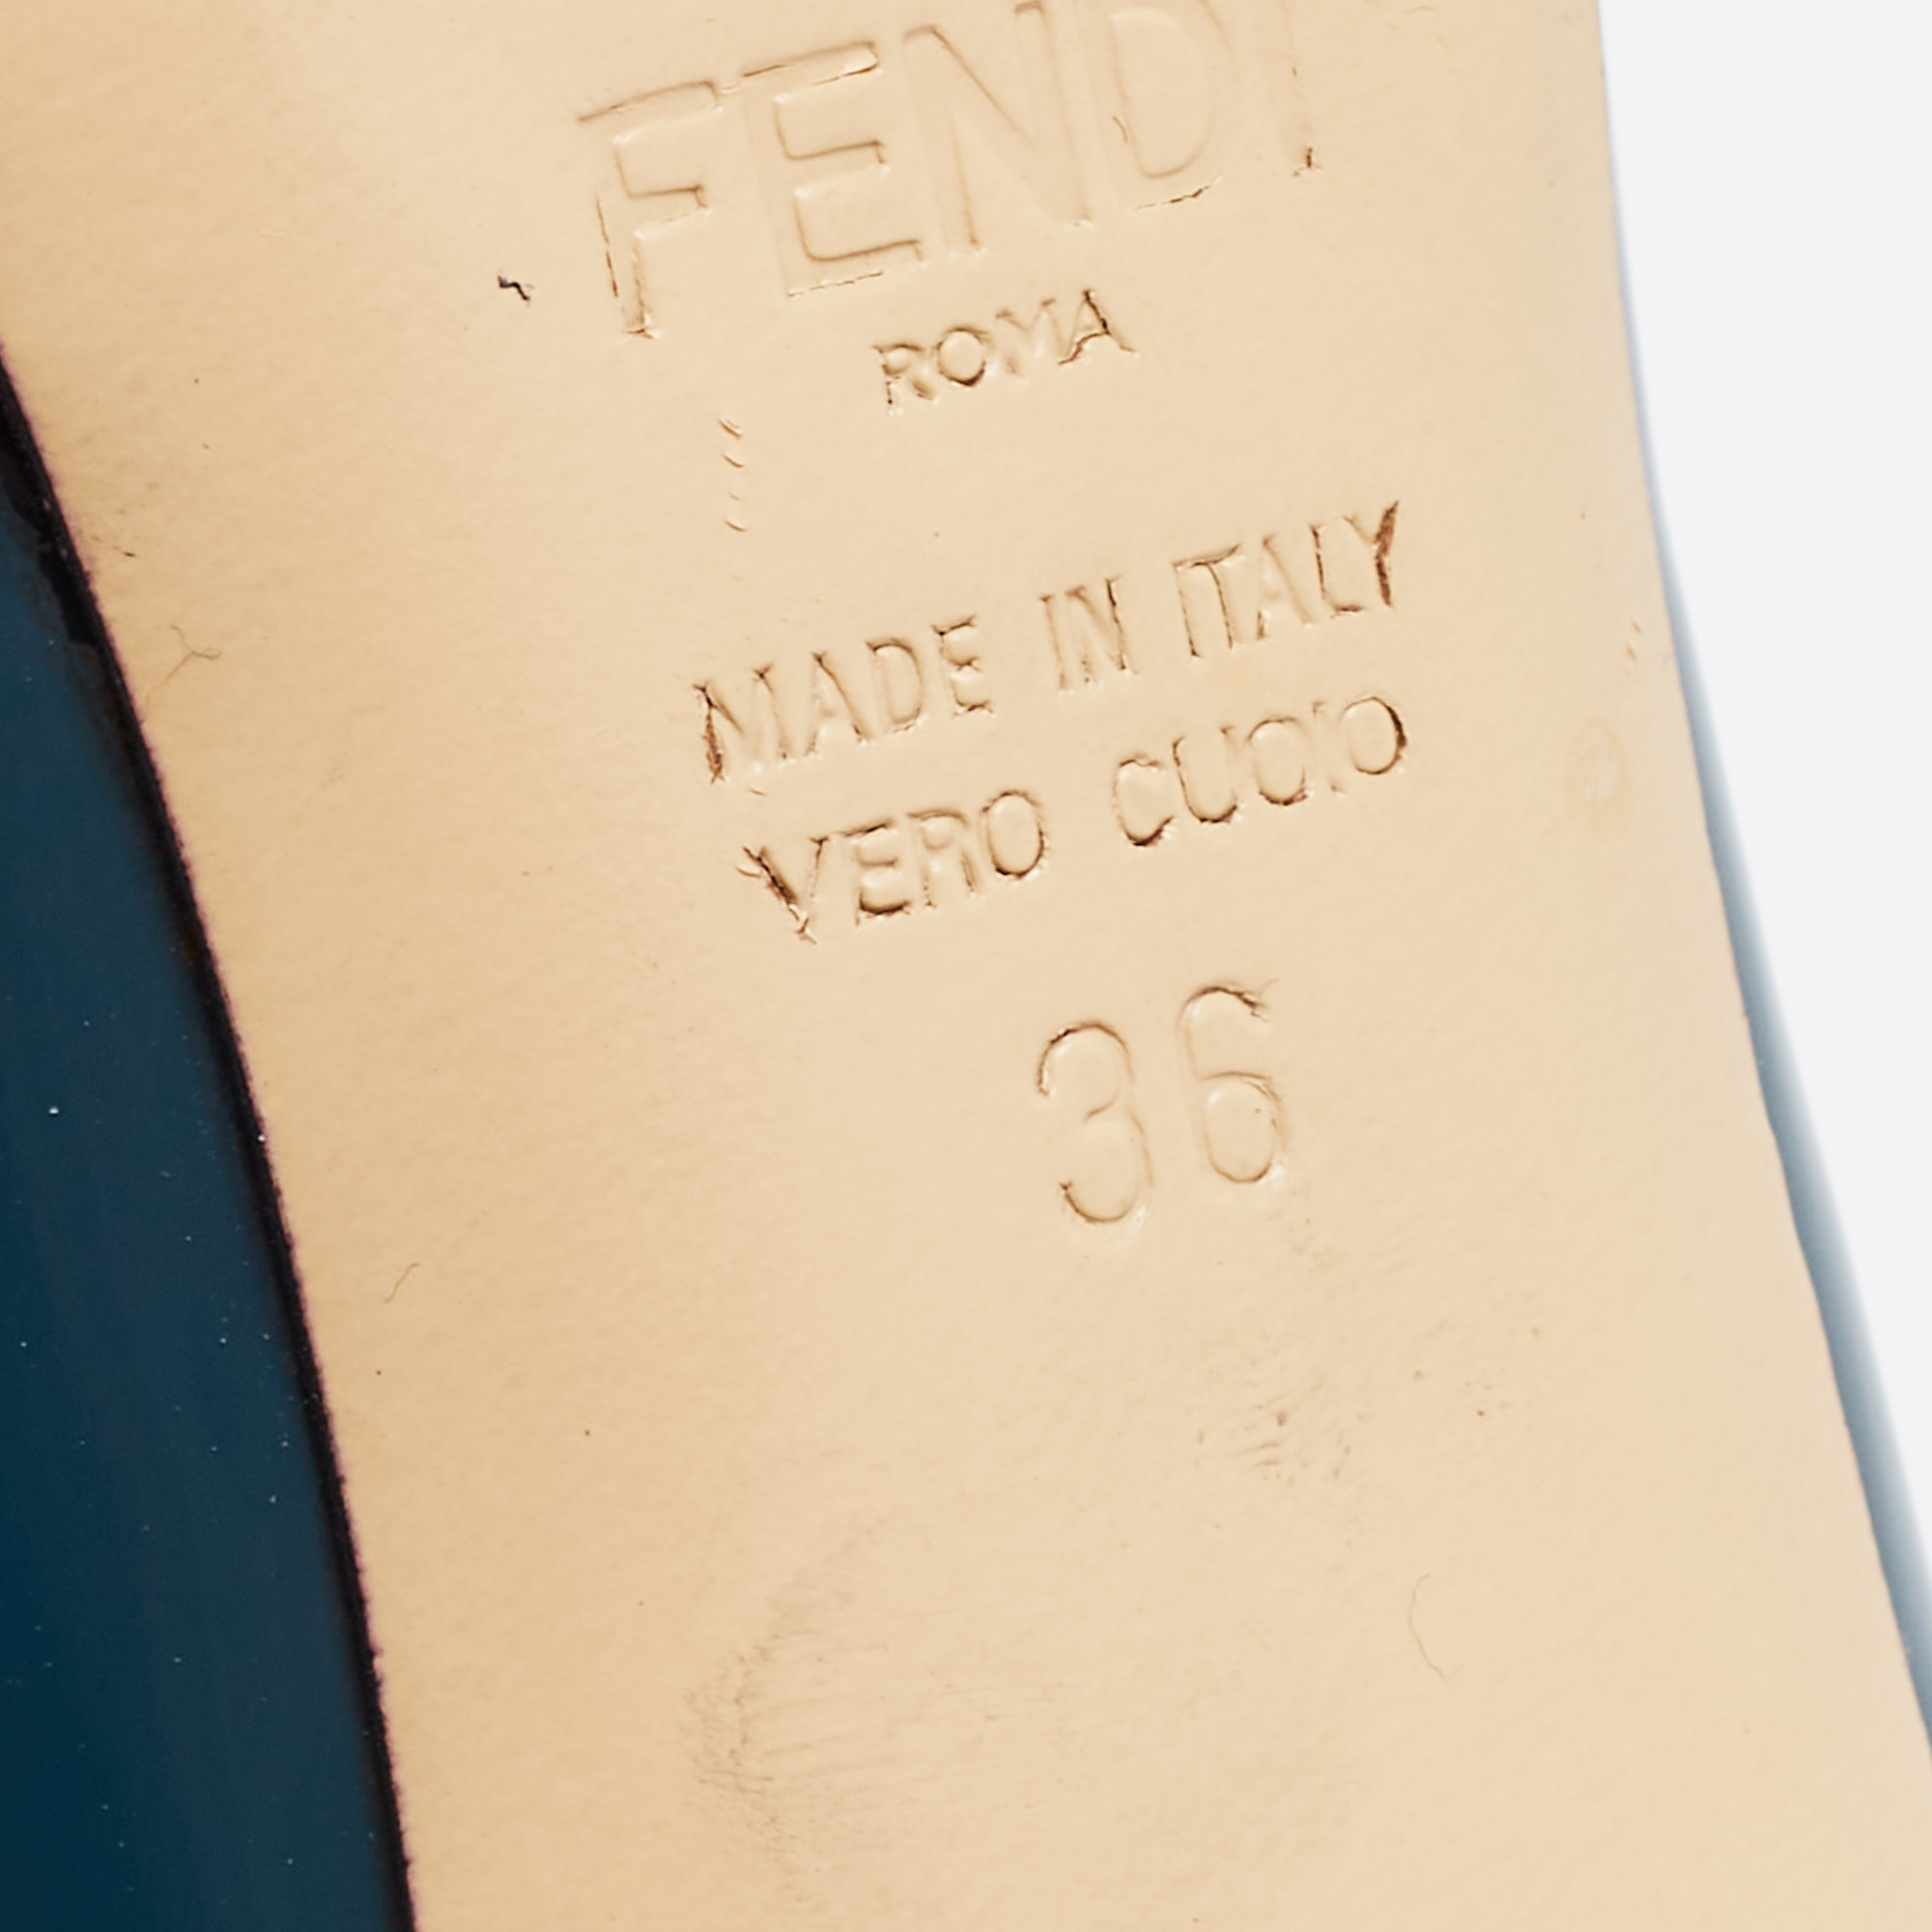 Fendi Teal Patent Leather Peep Toe Platform Pumps Size 36